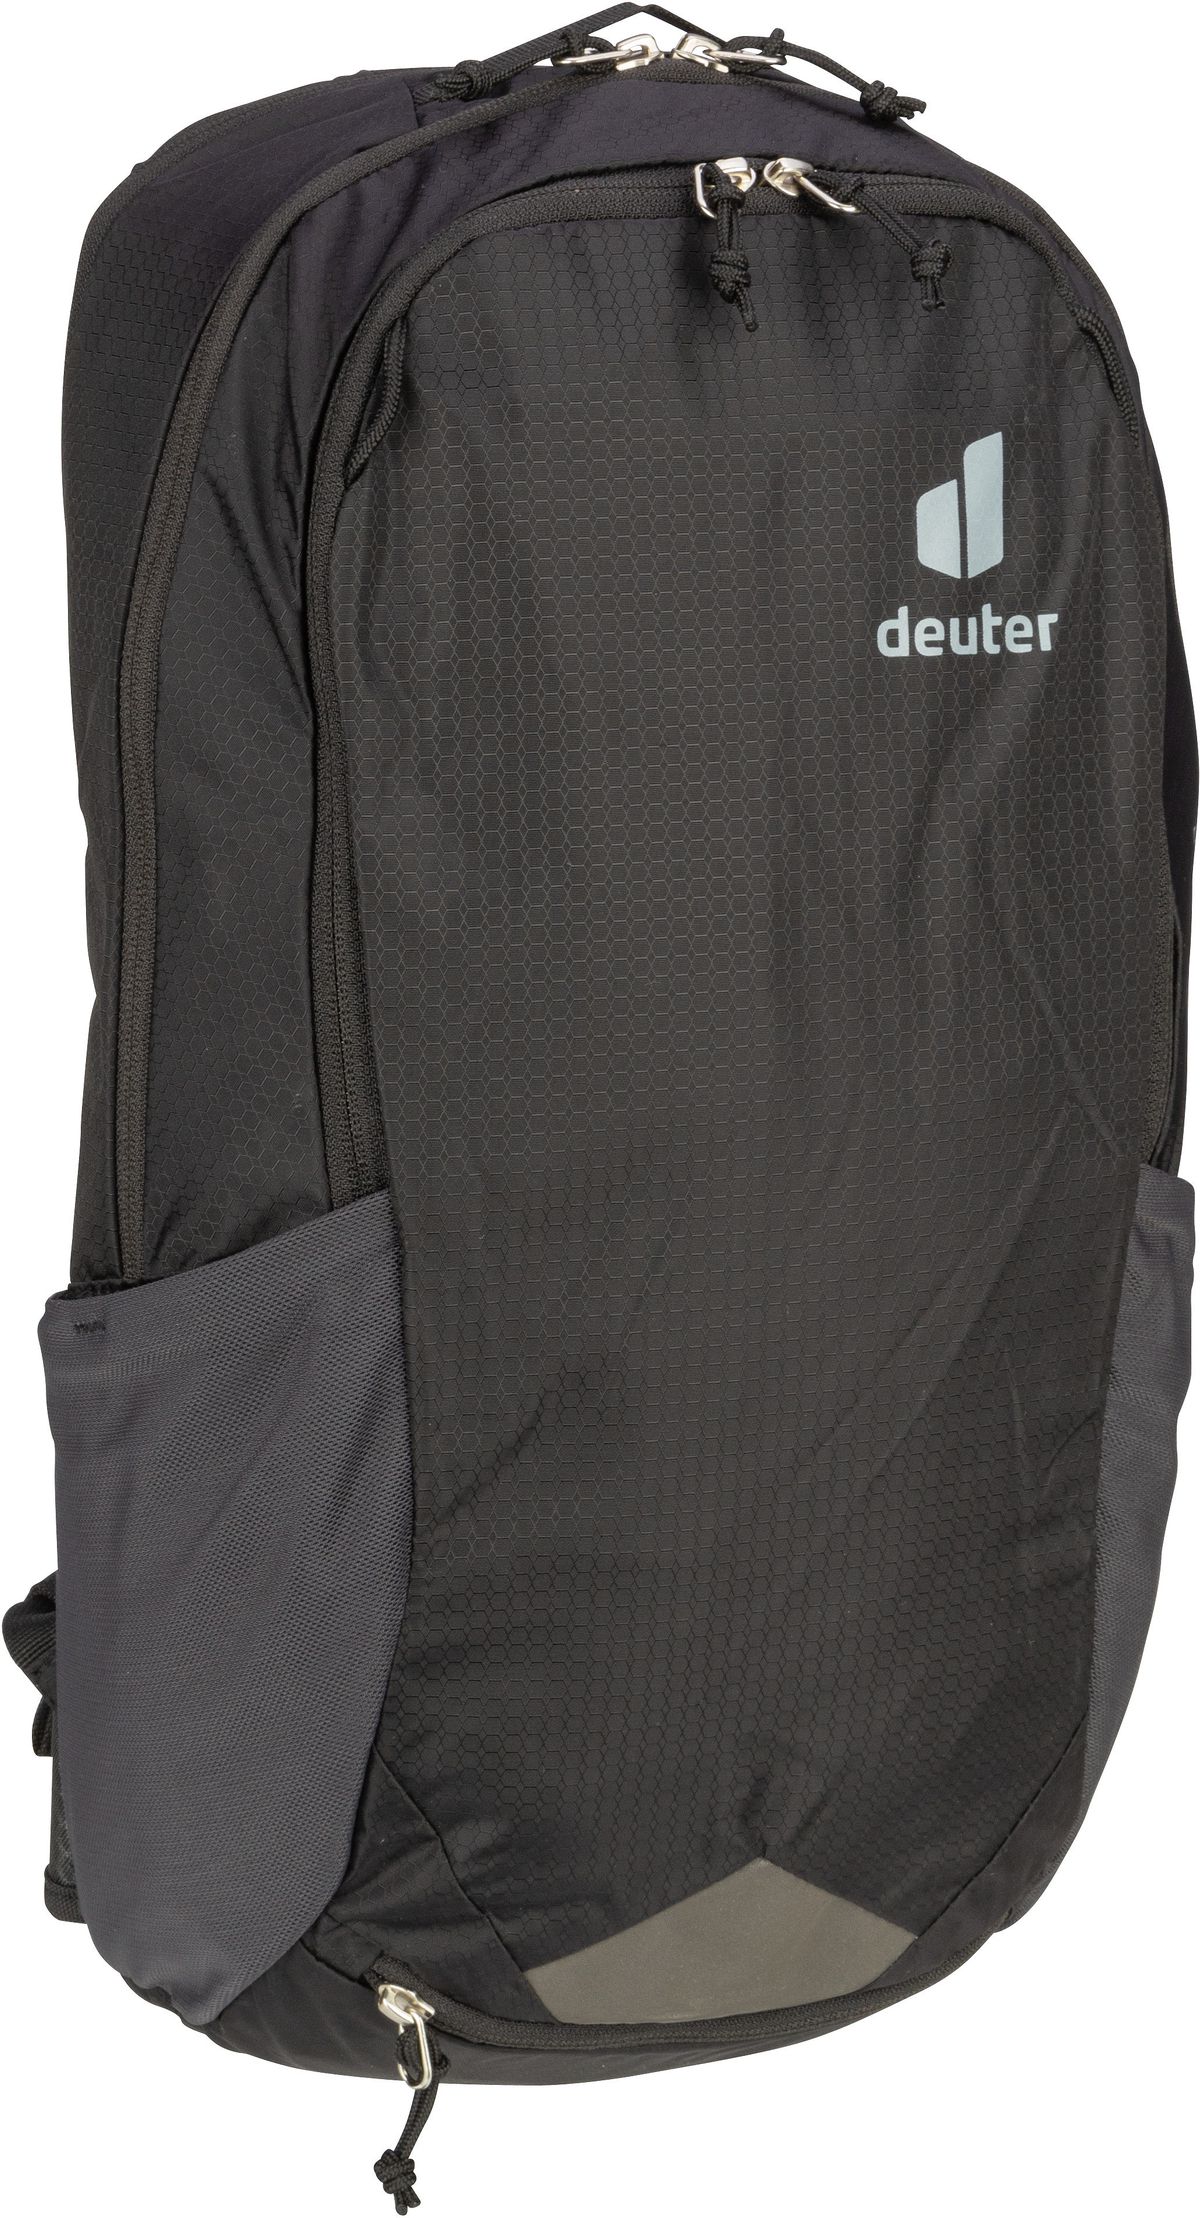 Deuter Deuter Race Air 14+3 in Schwarz (14 Liter), Rucksack / Backpack